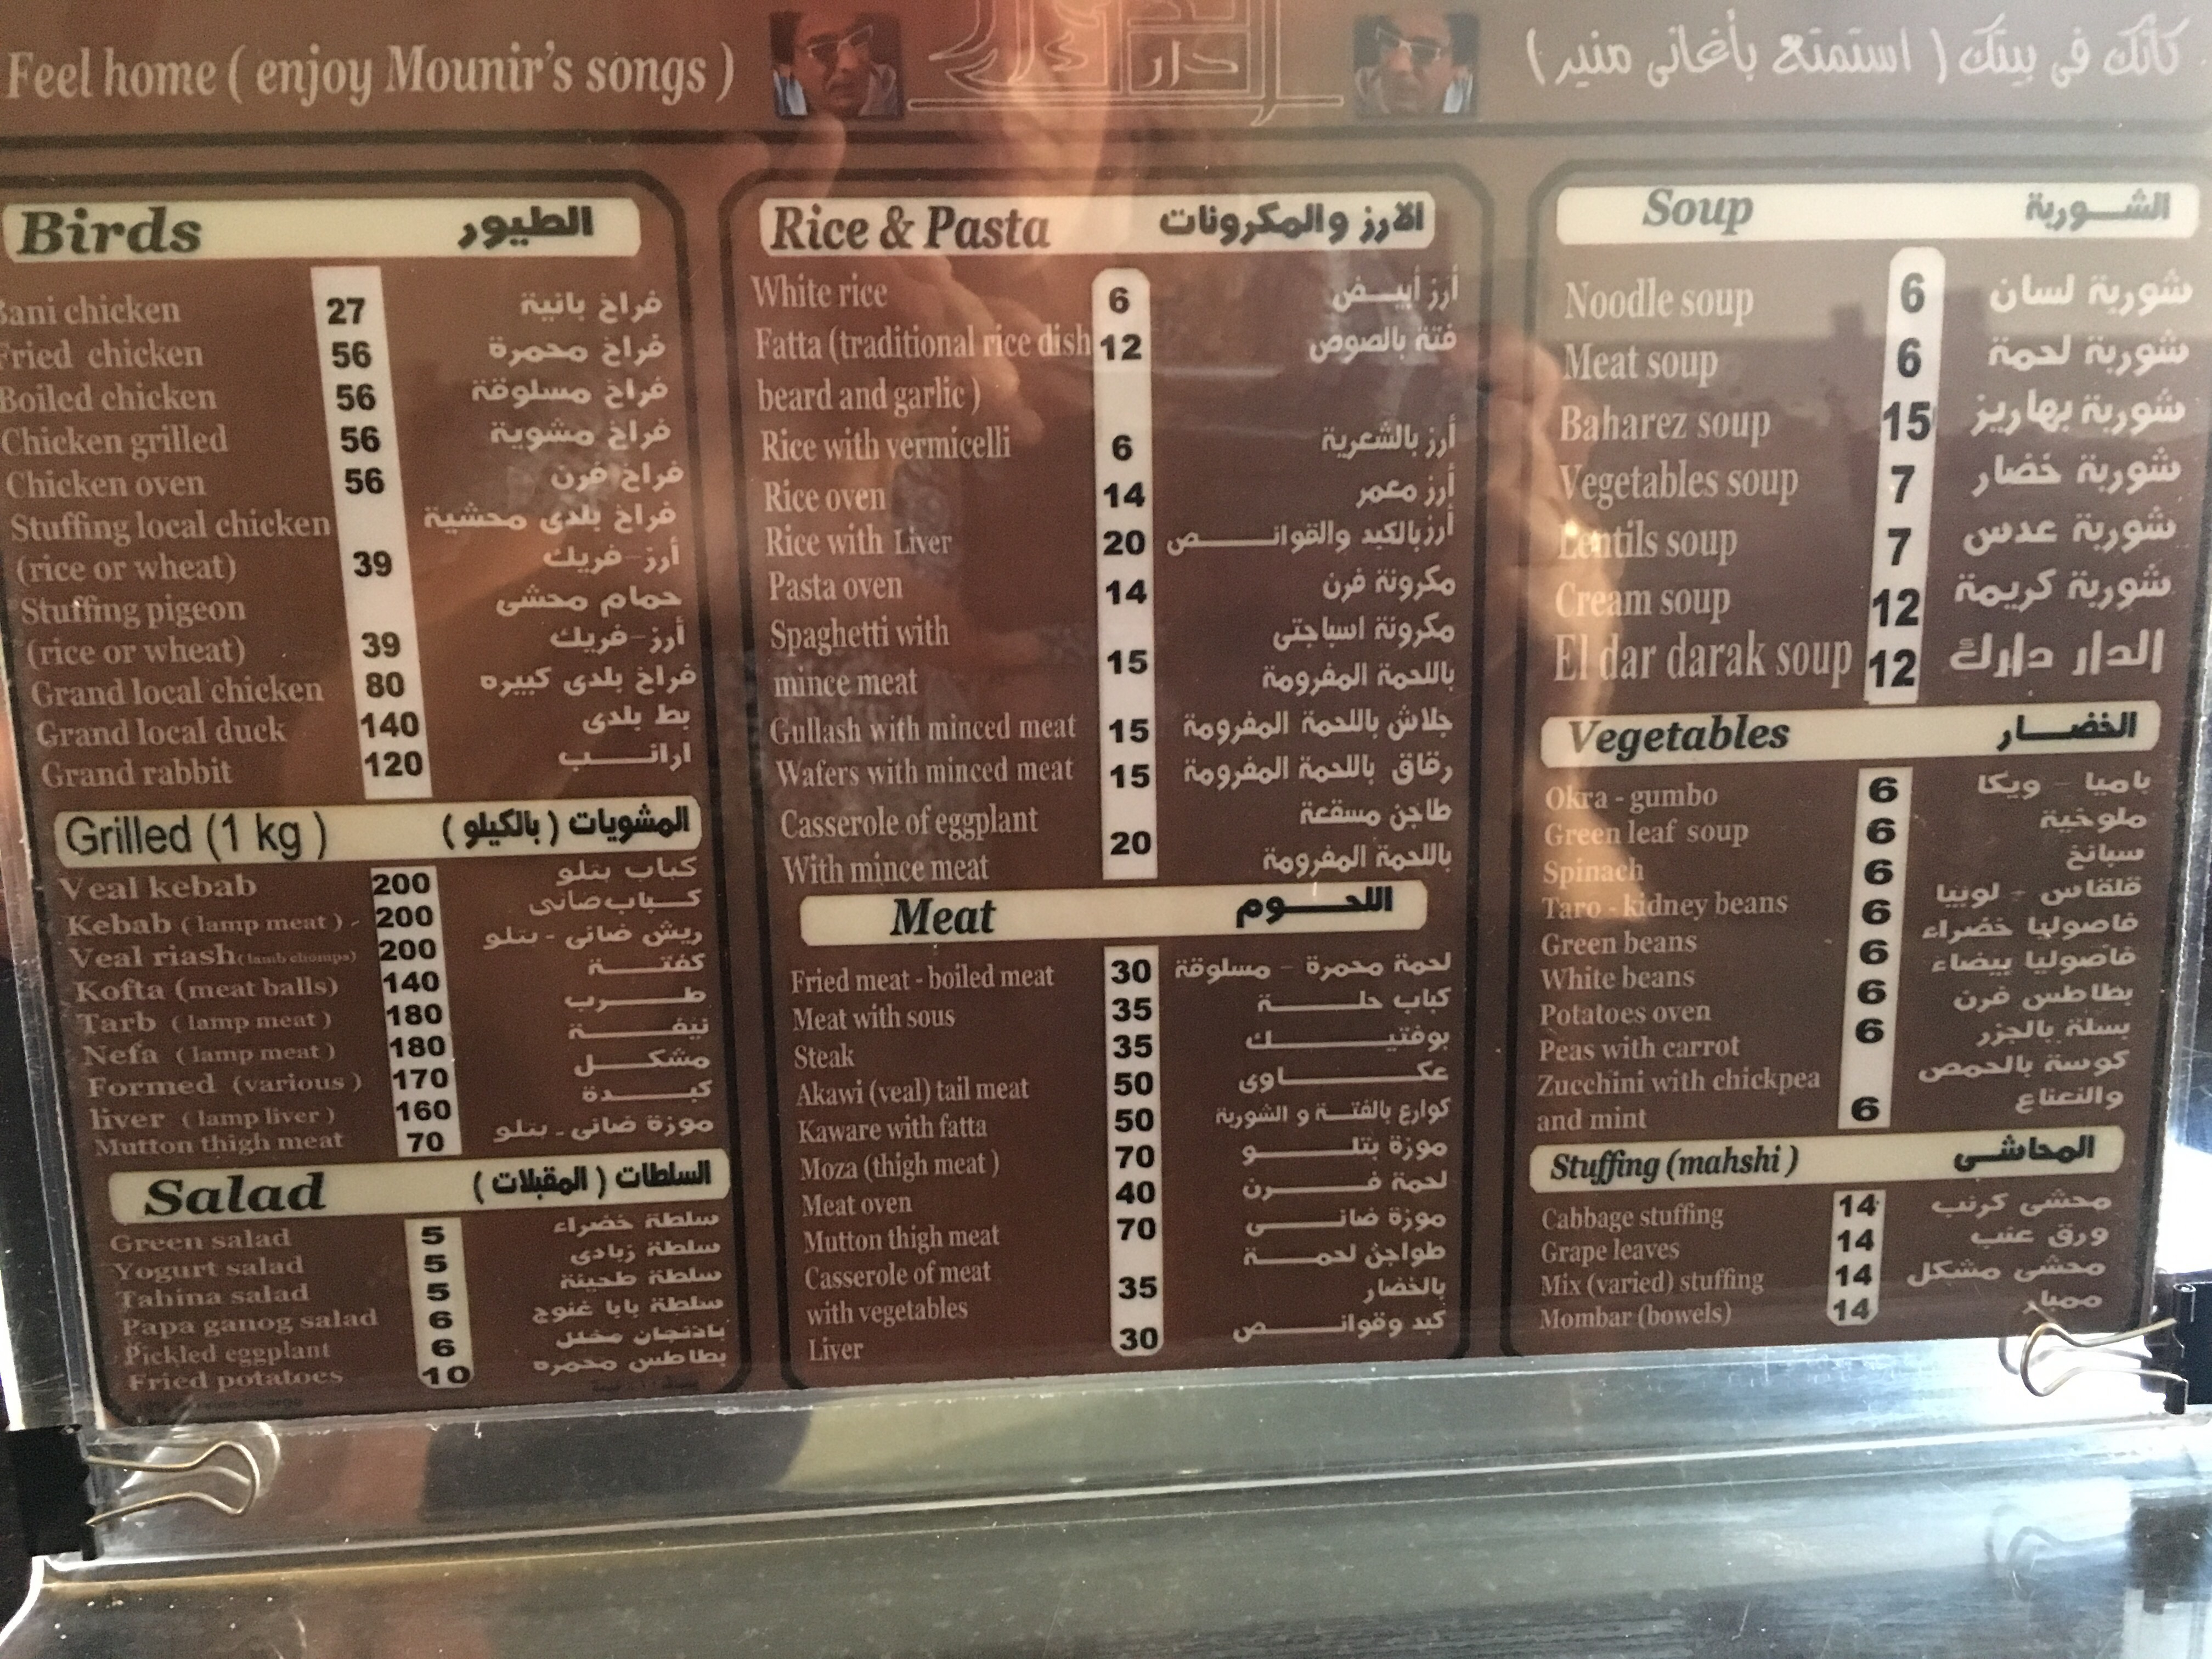 Speisekarte El Dar Darak Restaurant in Hurghada